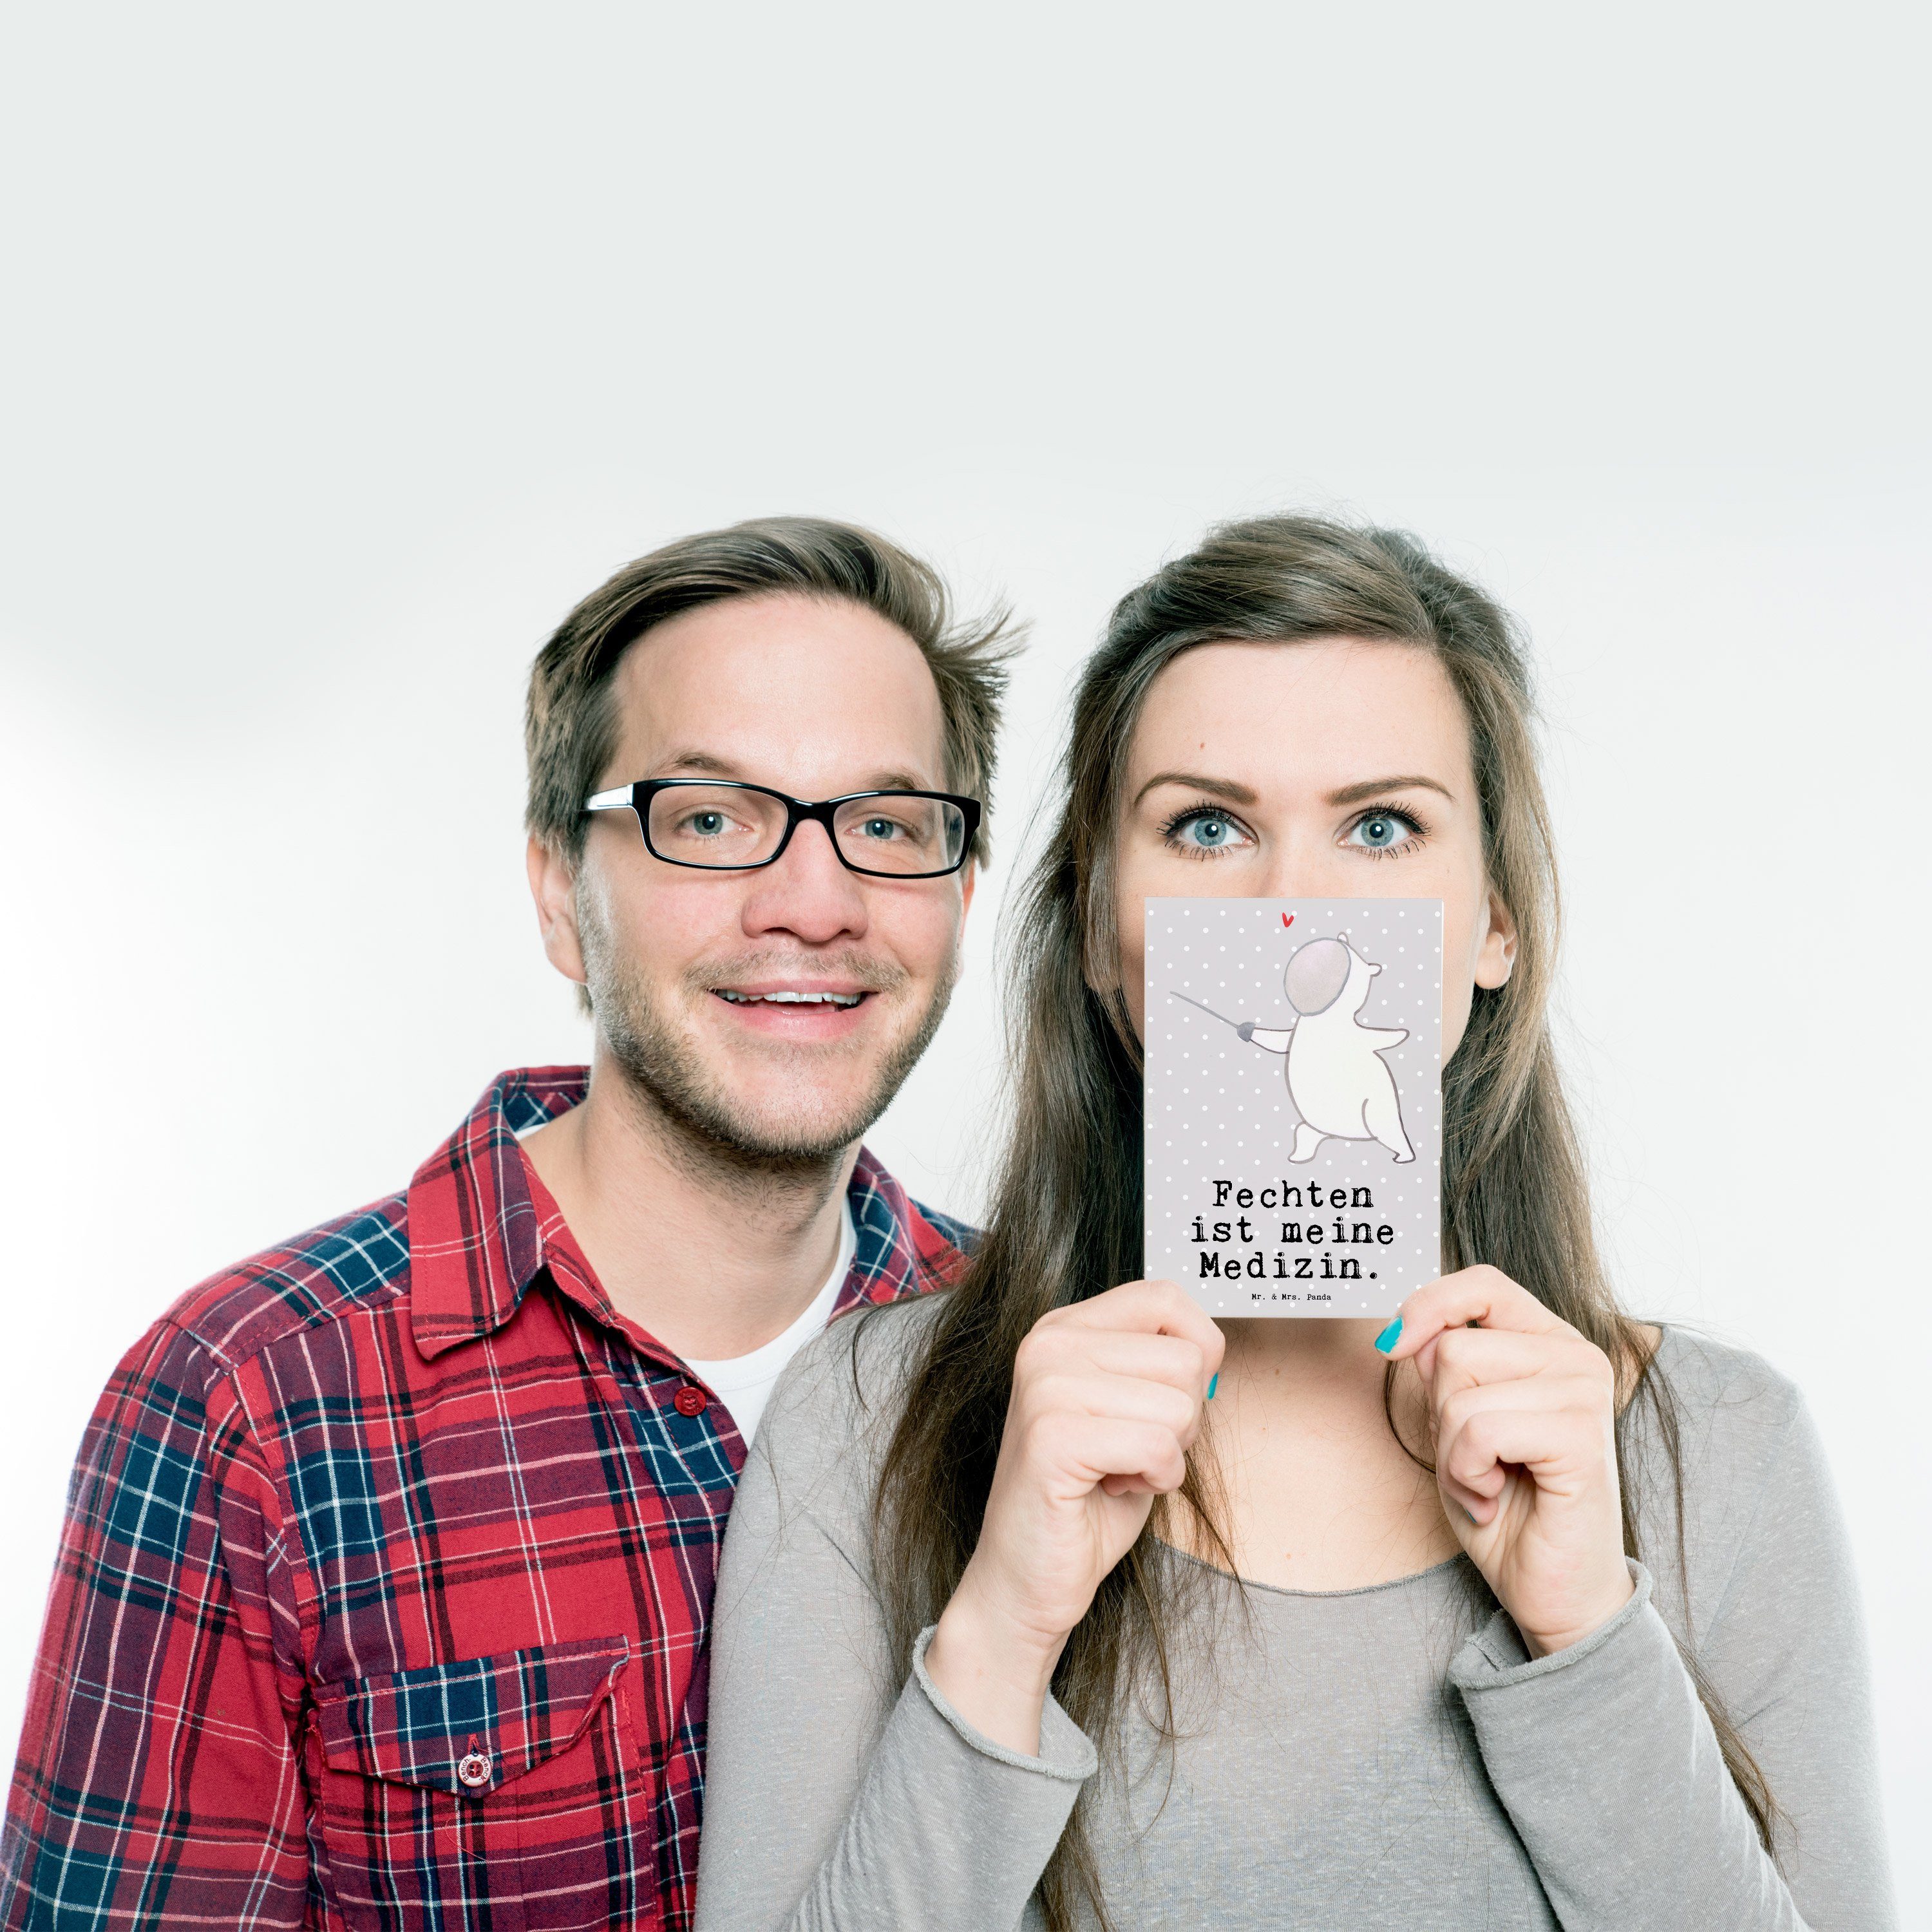 Mr. & Mrs. Panda Schenken, Postkarte - - Medizin Panda Sportler Fechten Geschenk, Pastell Grau